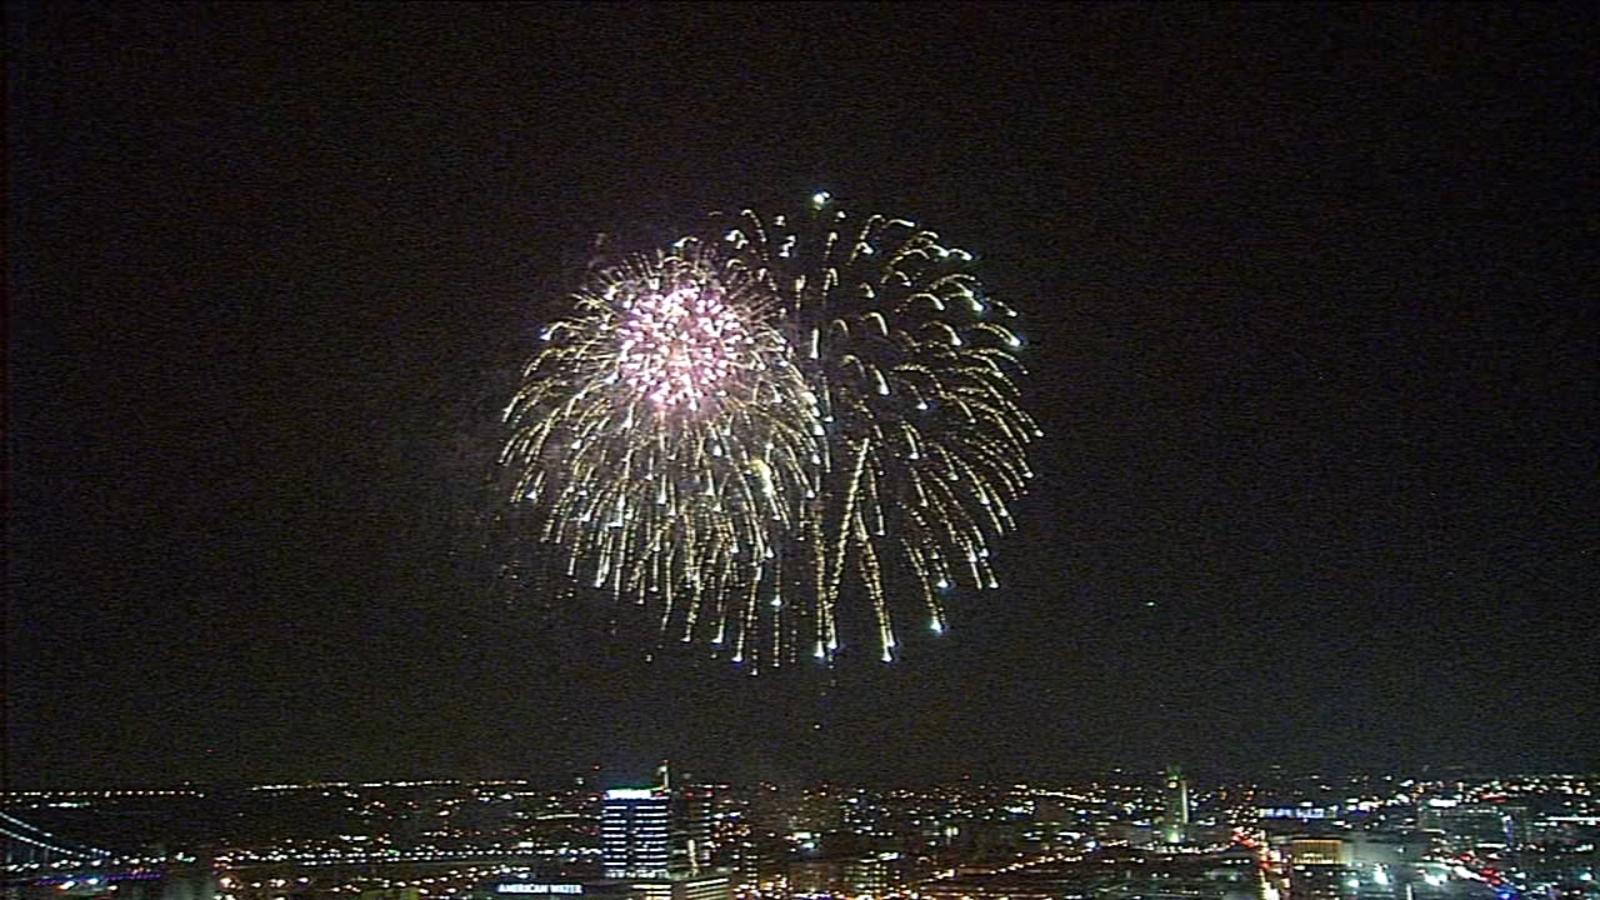 Philadelphia rings in 2020 with fireworks over the Delaware River